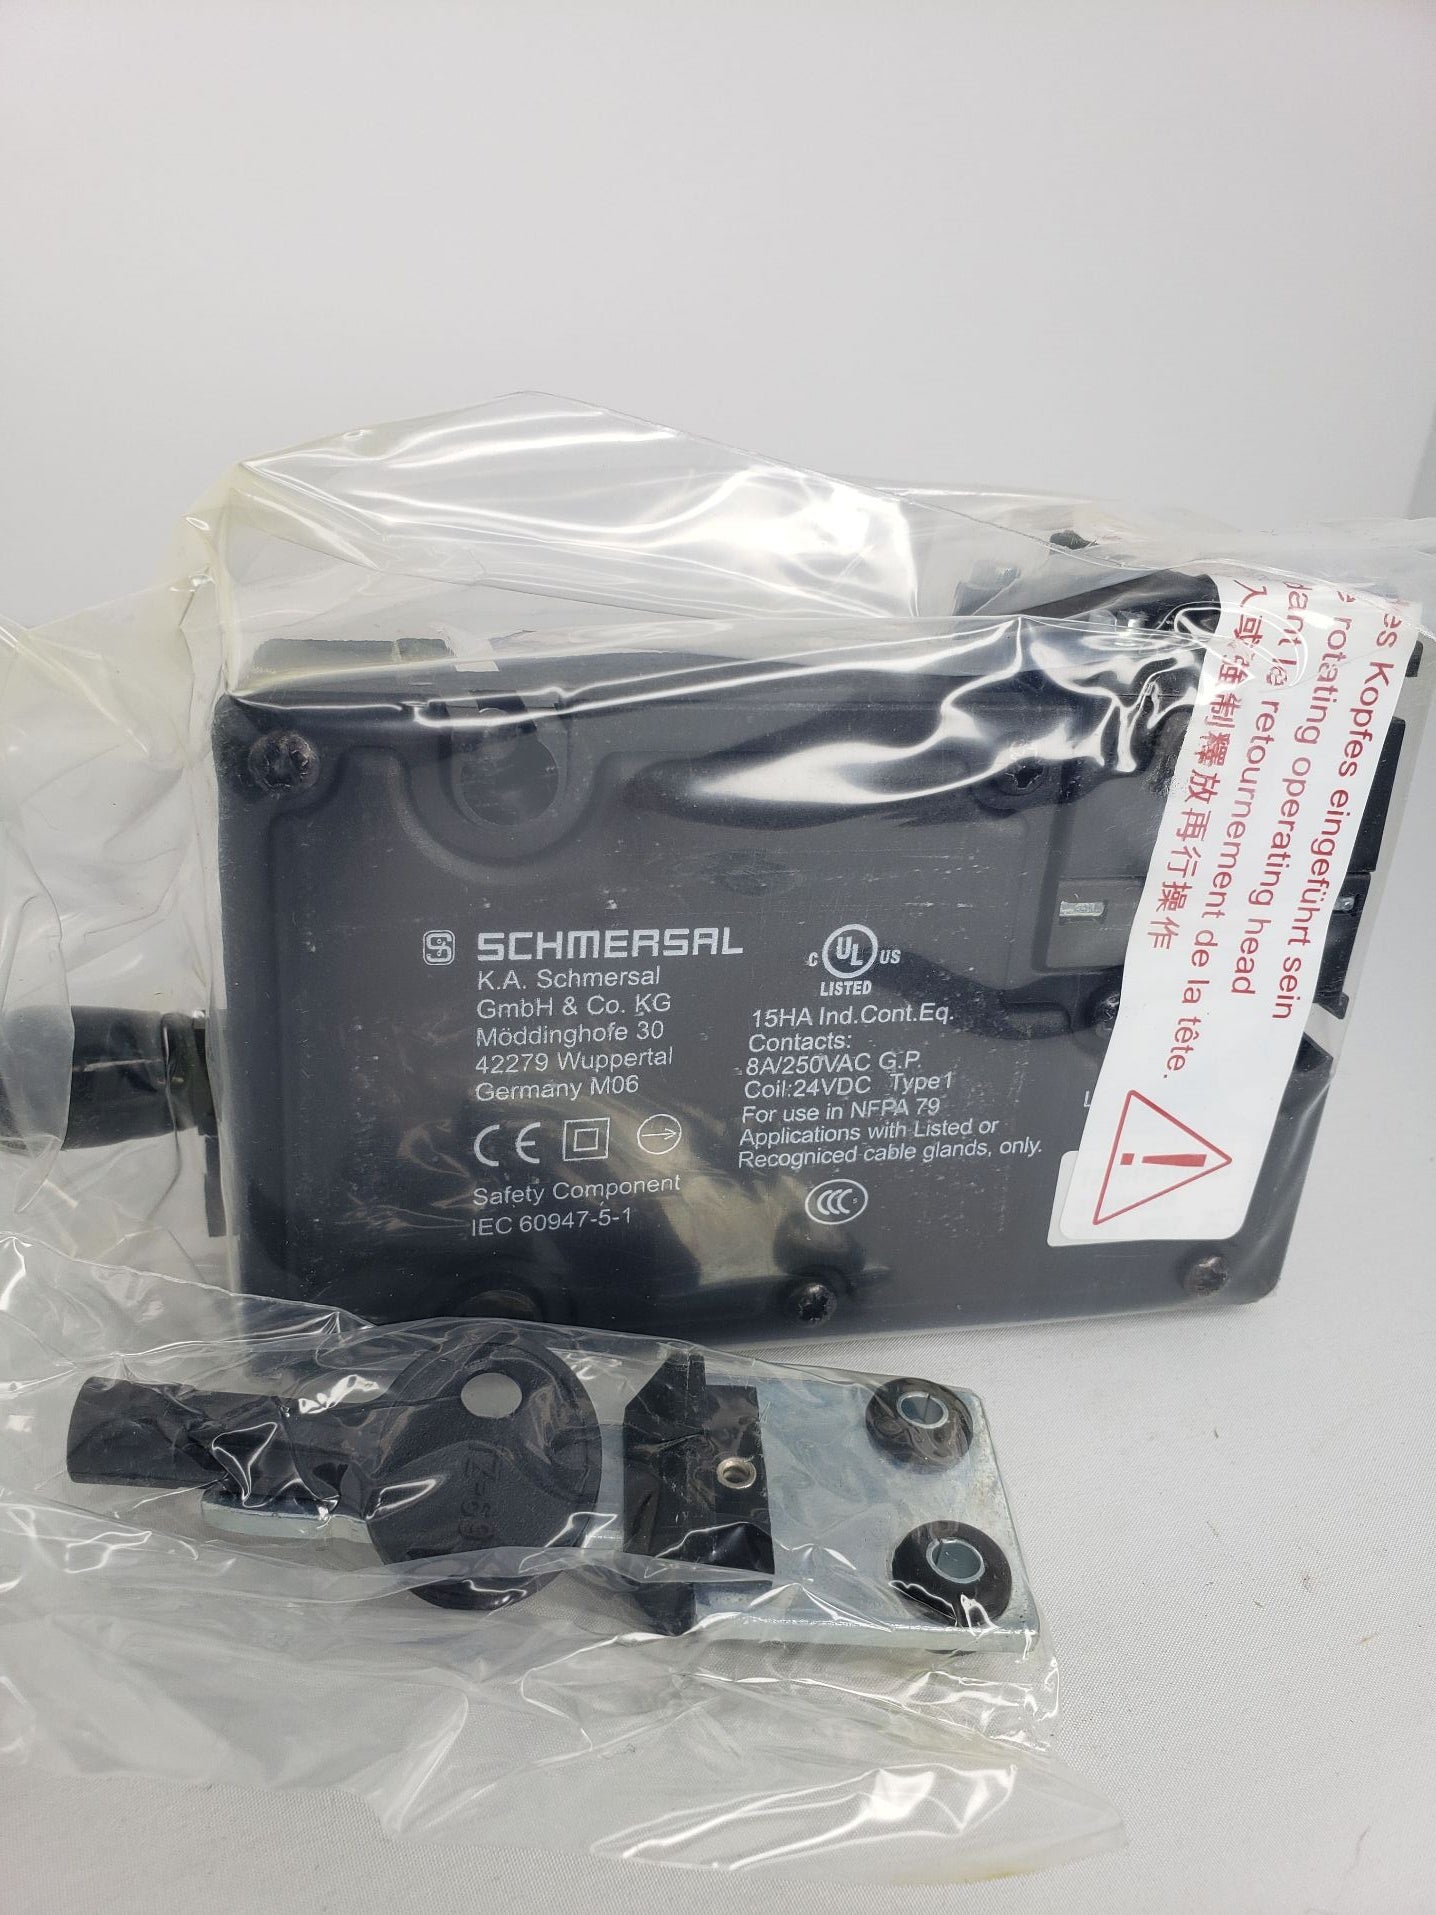 Schmersal TZFSP24VDC Interlock Safety Switch 24v-dc